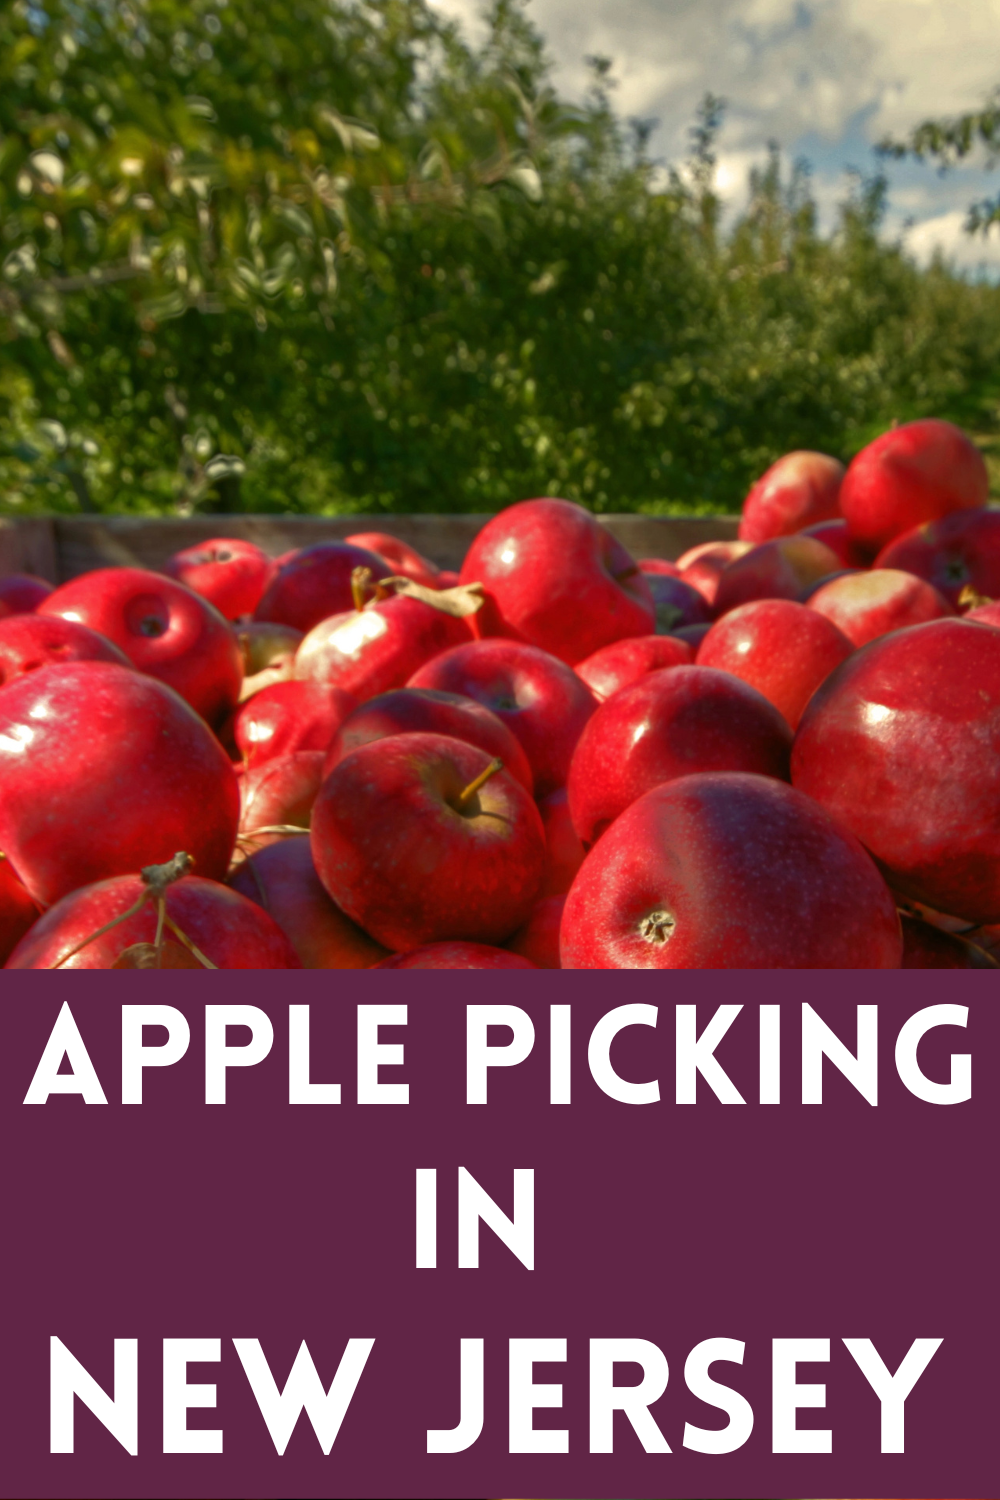 PYO Apple Picking New Jersey